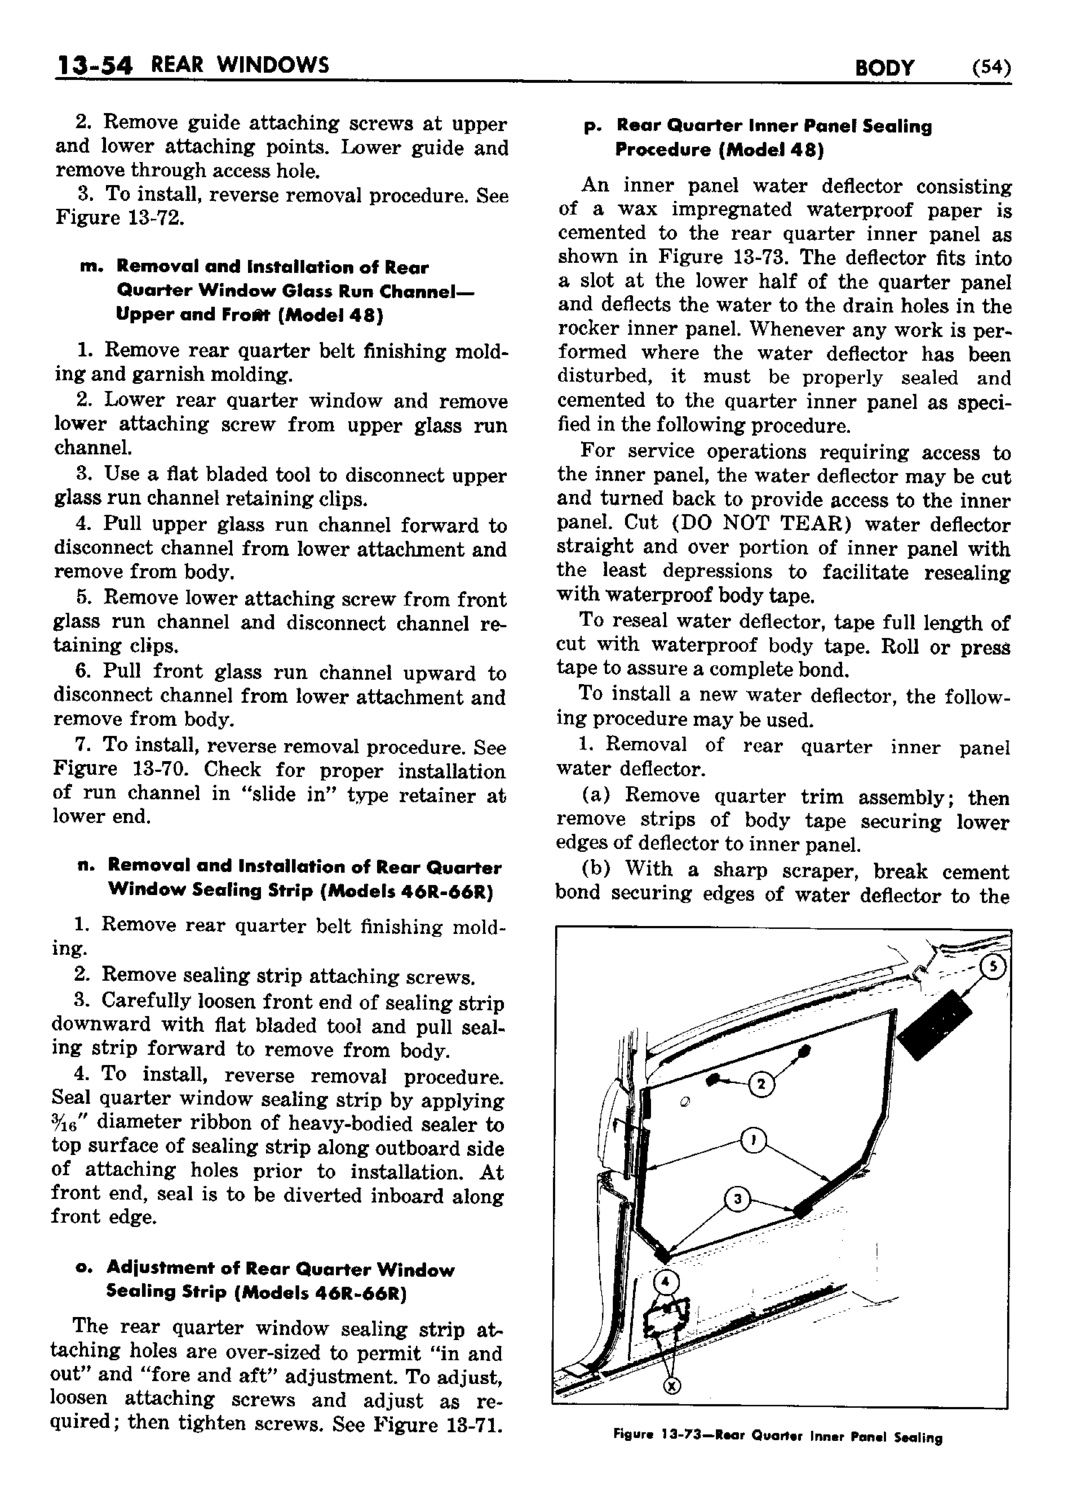 n_1958 Buick Body Service Manual-055-055.jpg